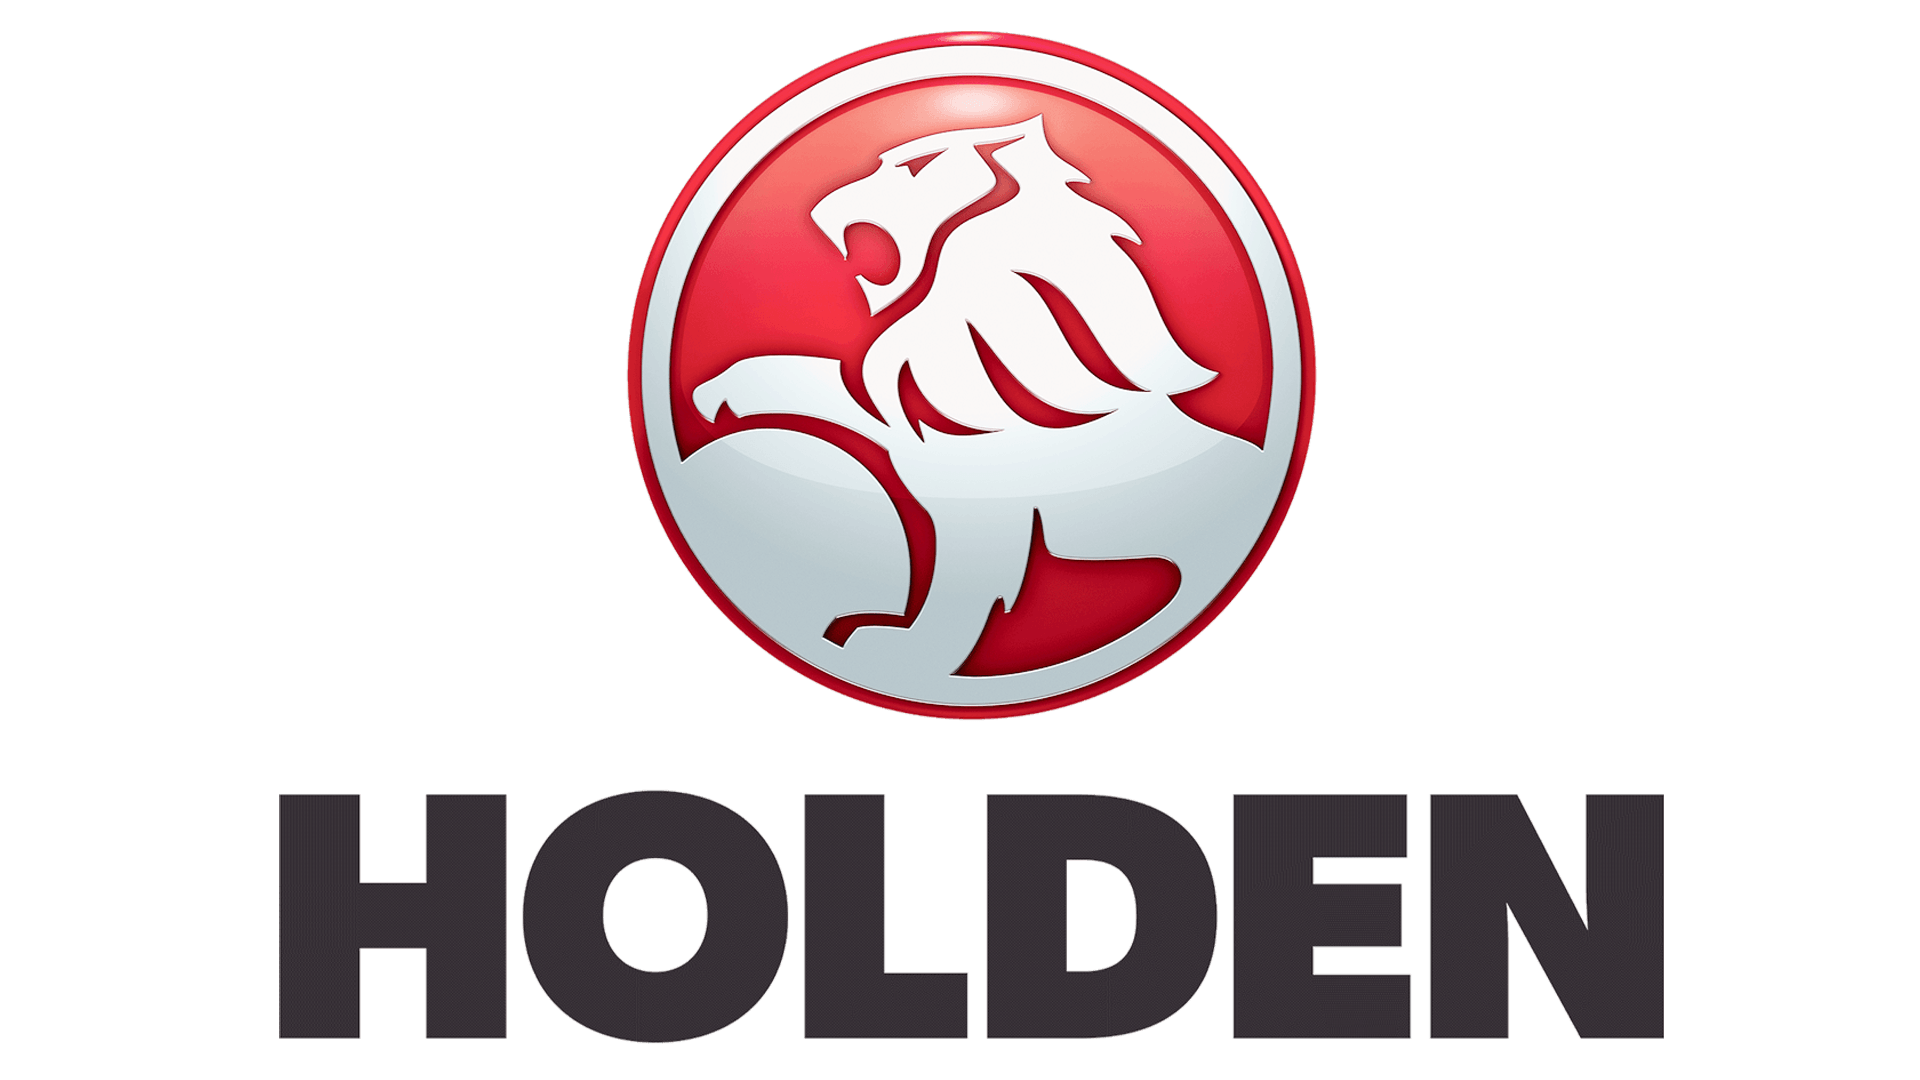 Australian Car Logo - Holden Logo, Holden Symbol, Meaning, History and Evolution